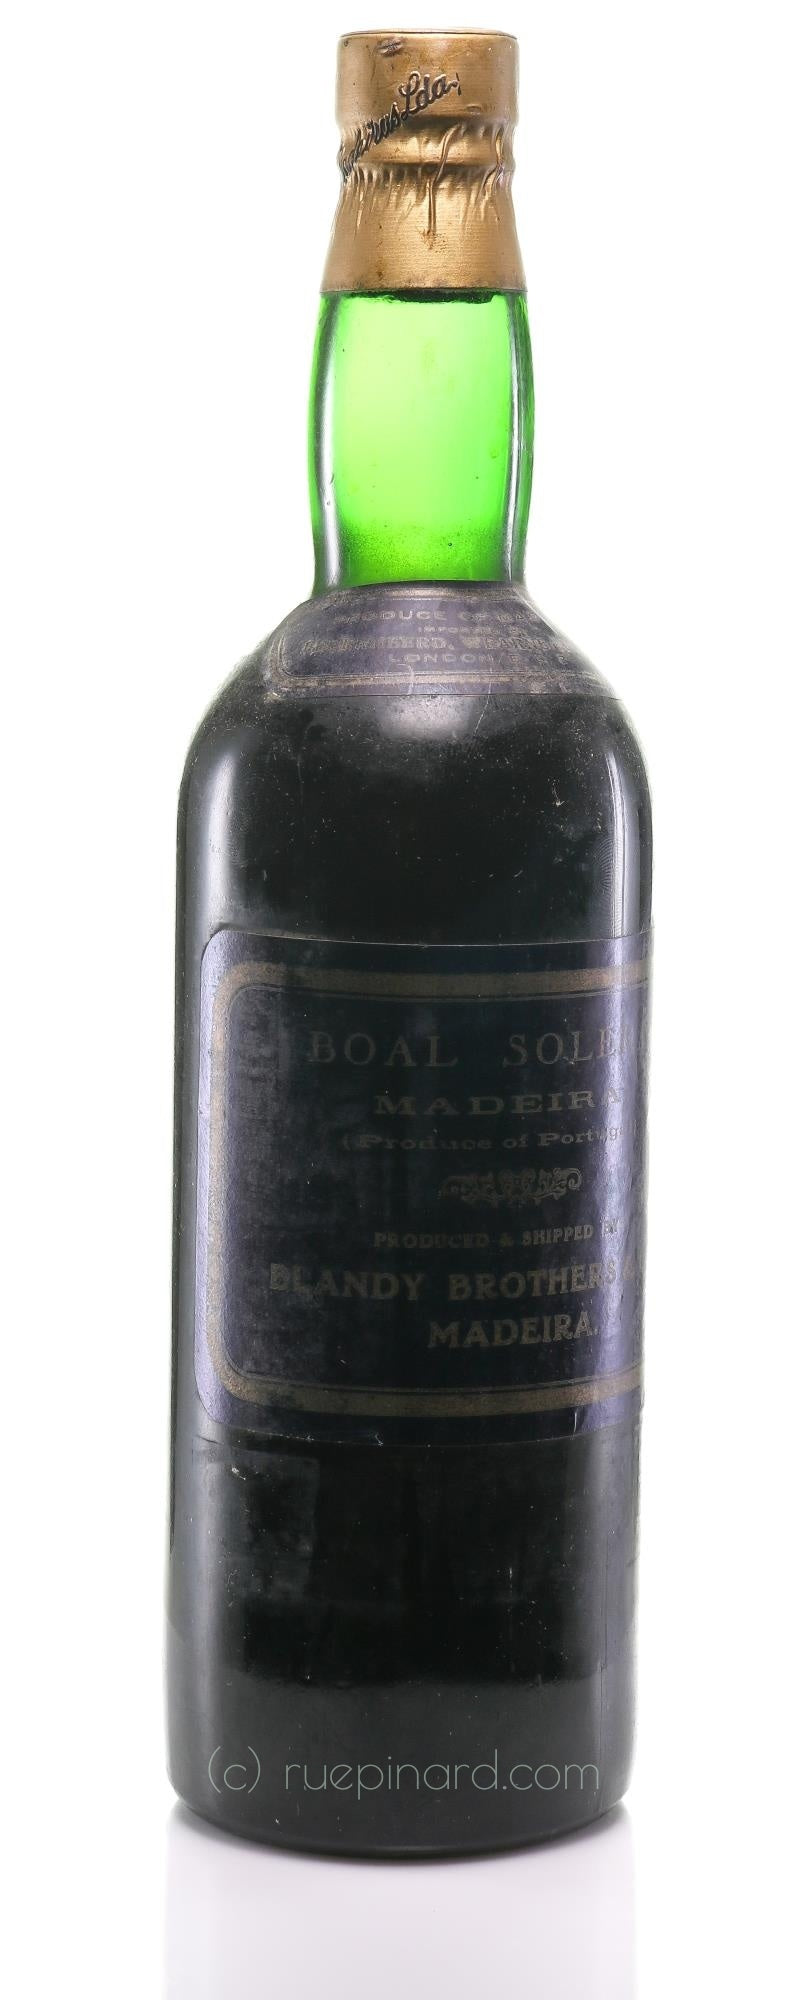 Blandys Boal Madeira 1826 - Rue Pinard